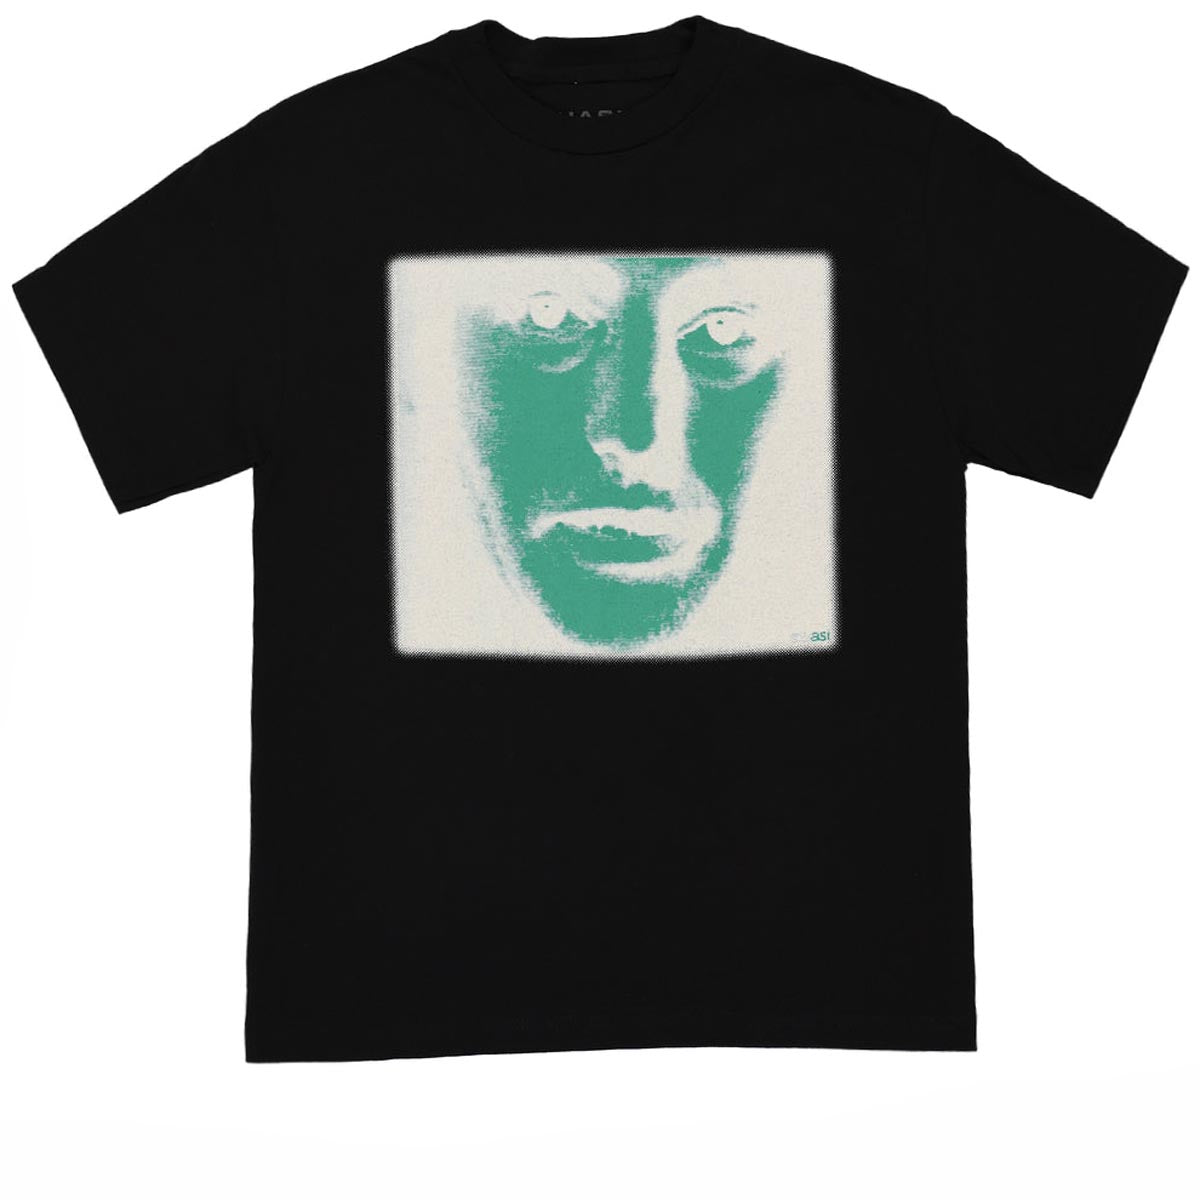 Quasi Gazer T-Shirt - Black image 1